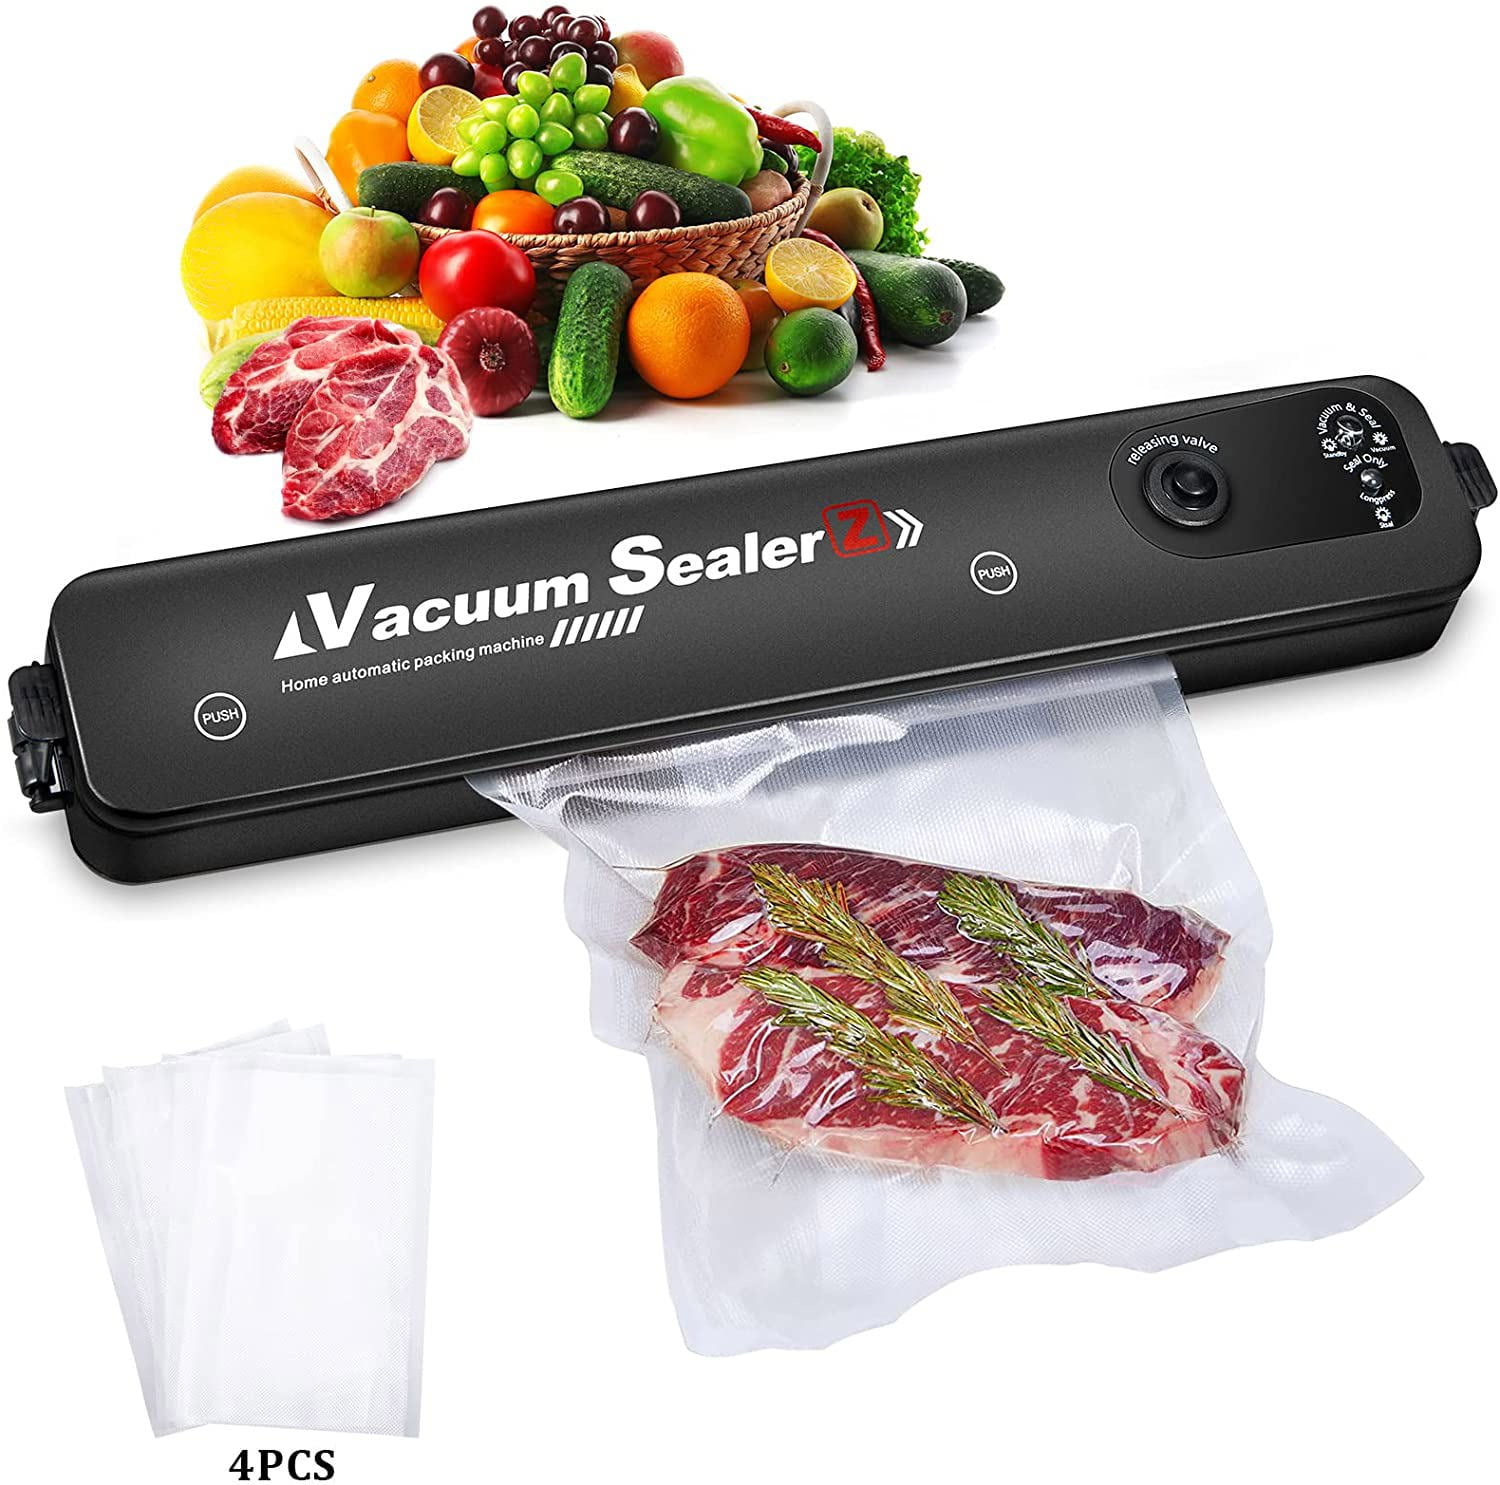 saengQ Best Electric Vacuum Food Sealer Packaging Machine For Home Kit –  JamminComida